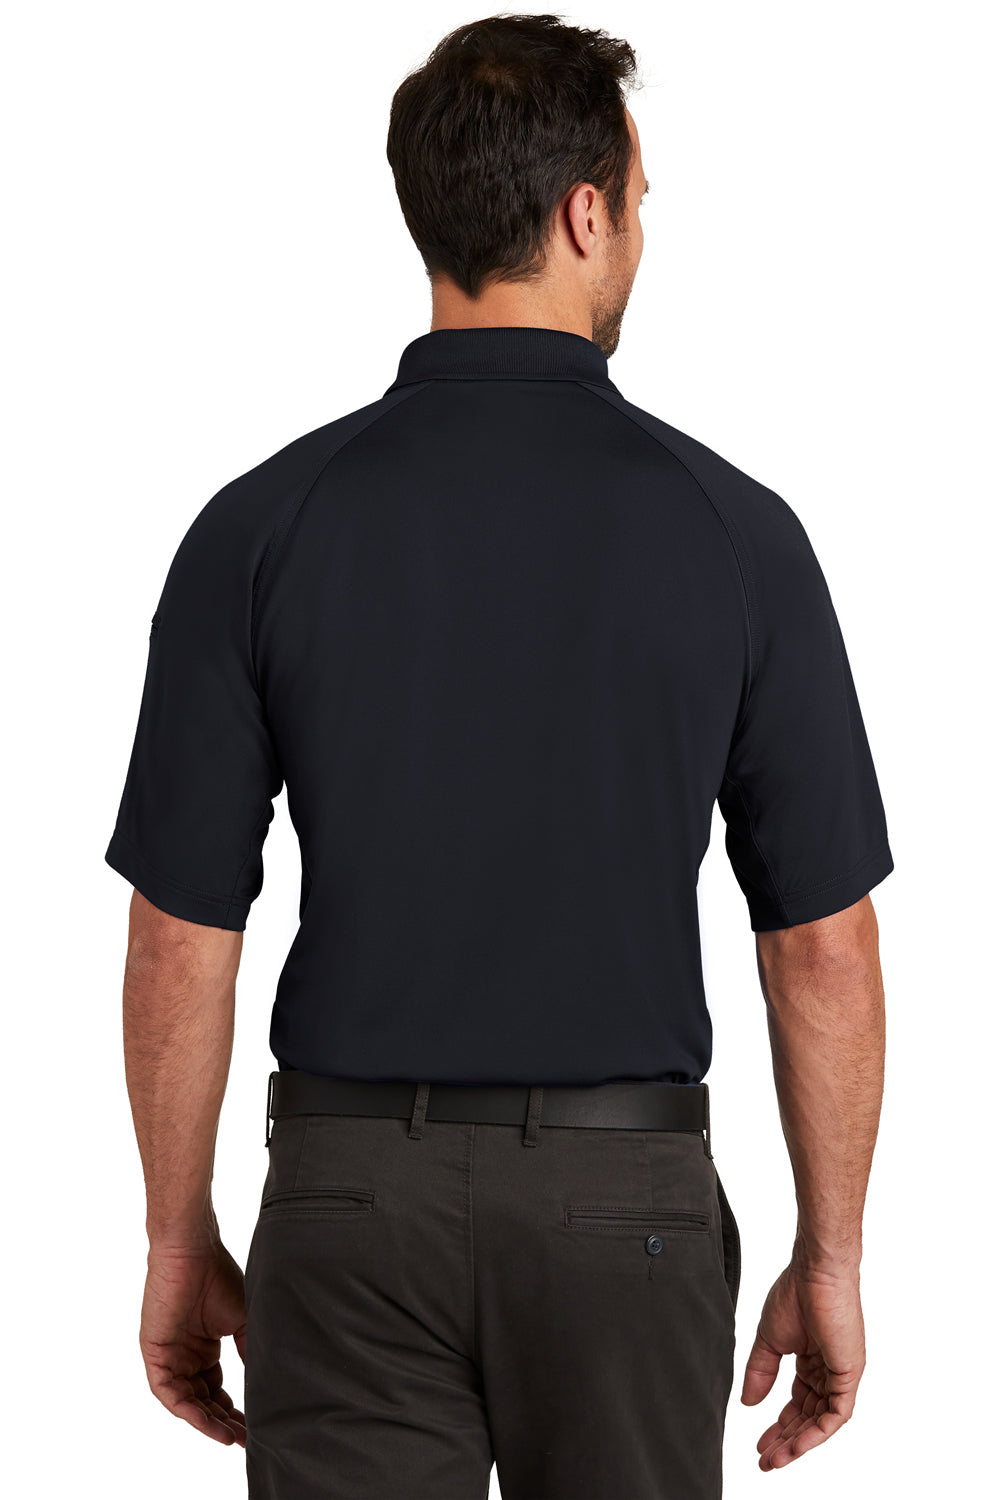 CornerStone CS420 Mens Select Tactical Moisture Wicking Short Sleeve Polo Shirt Navy Blue Back